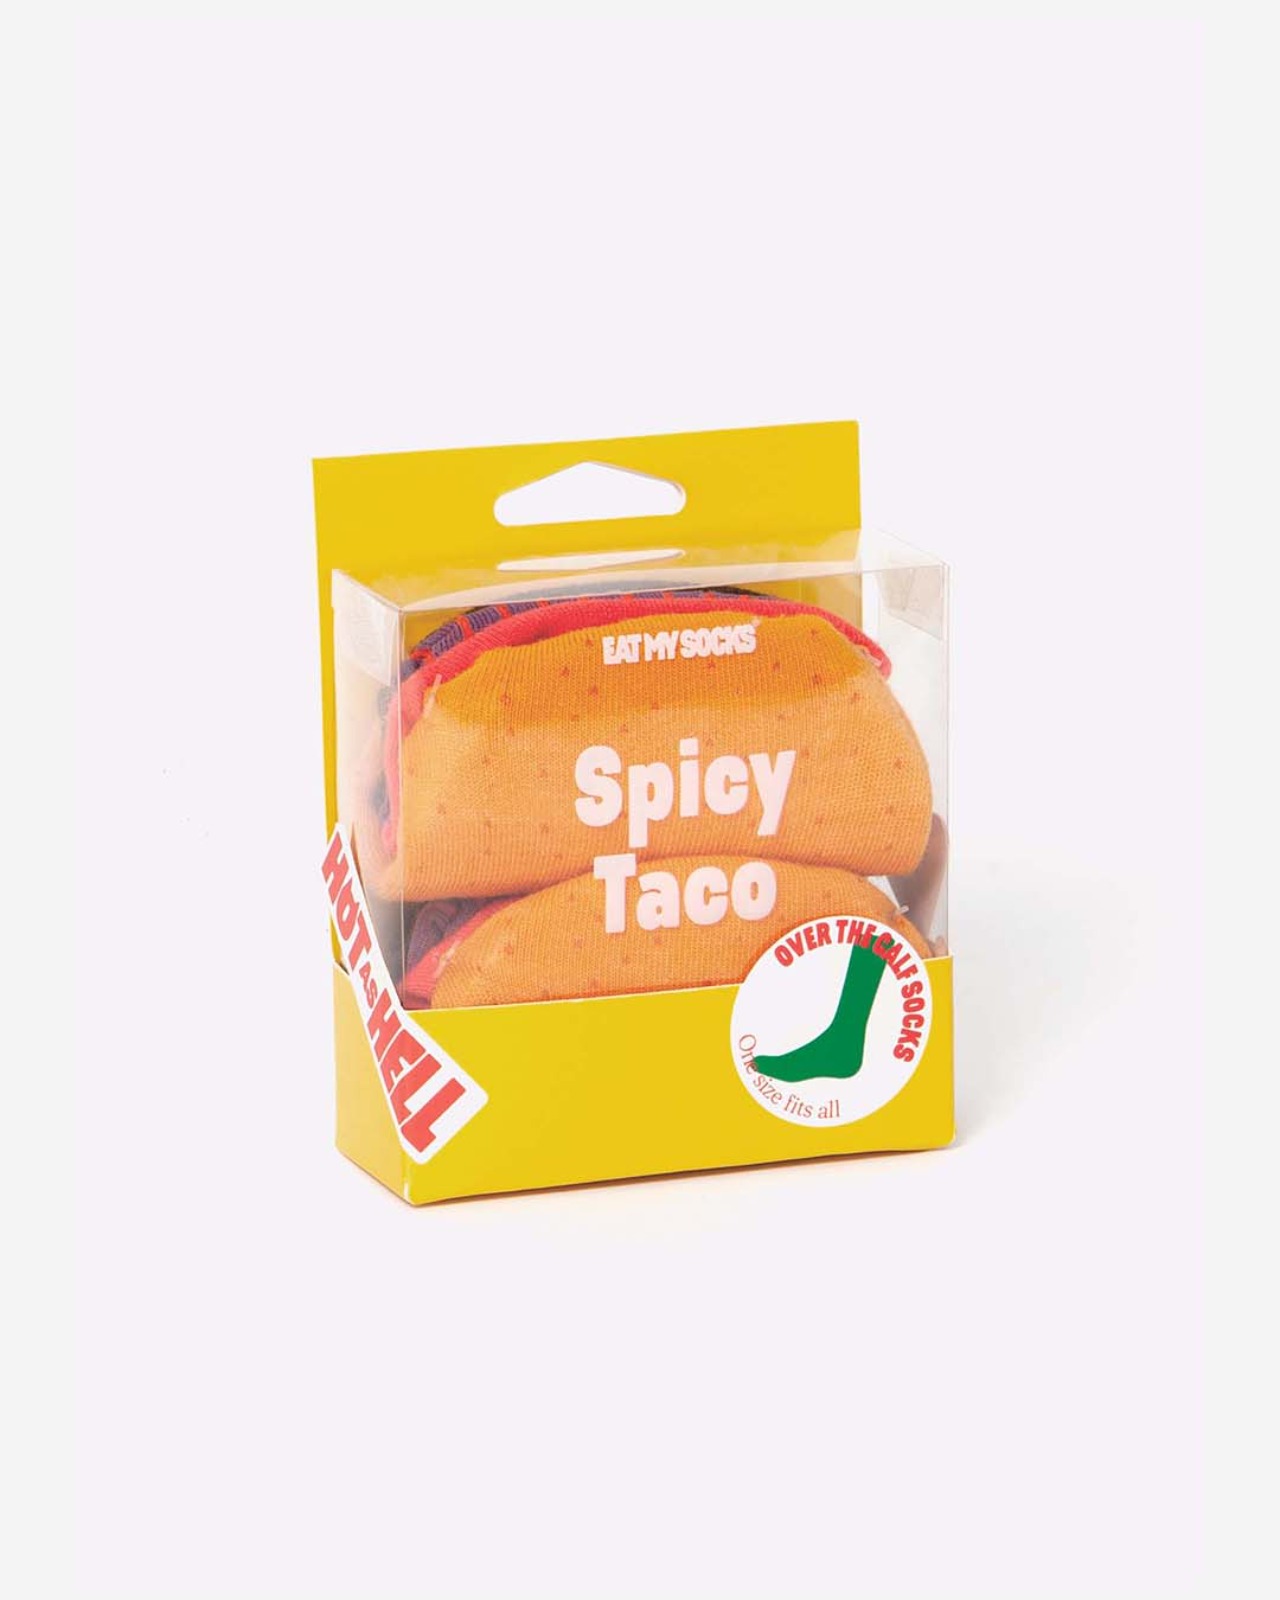 [EAT MY SOCKS] Spicy Taco